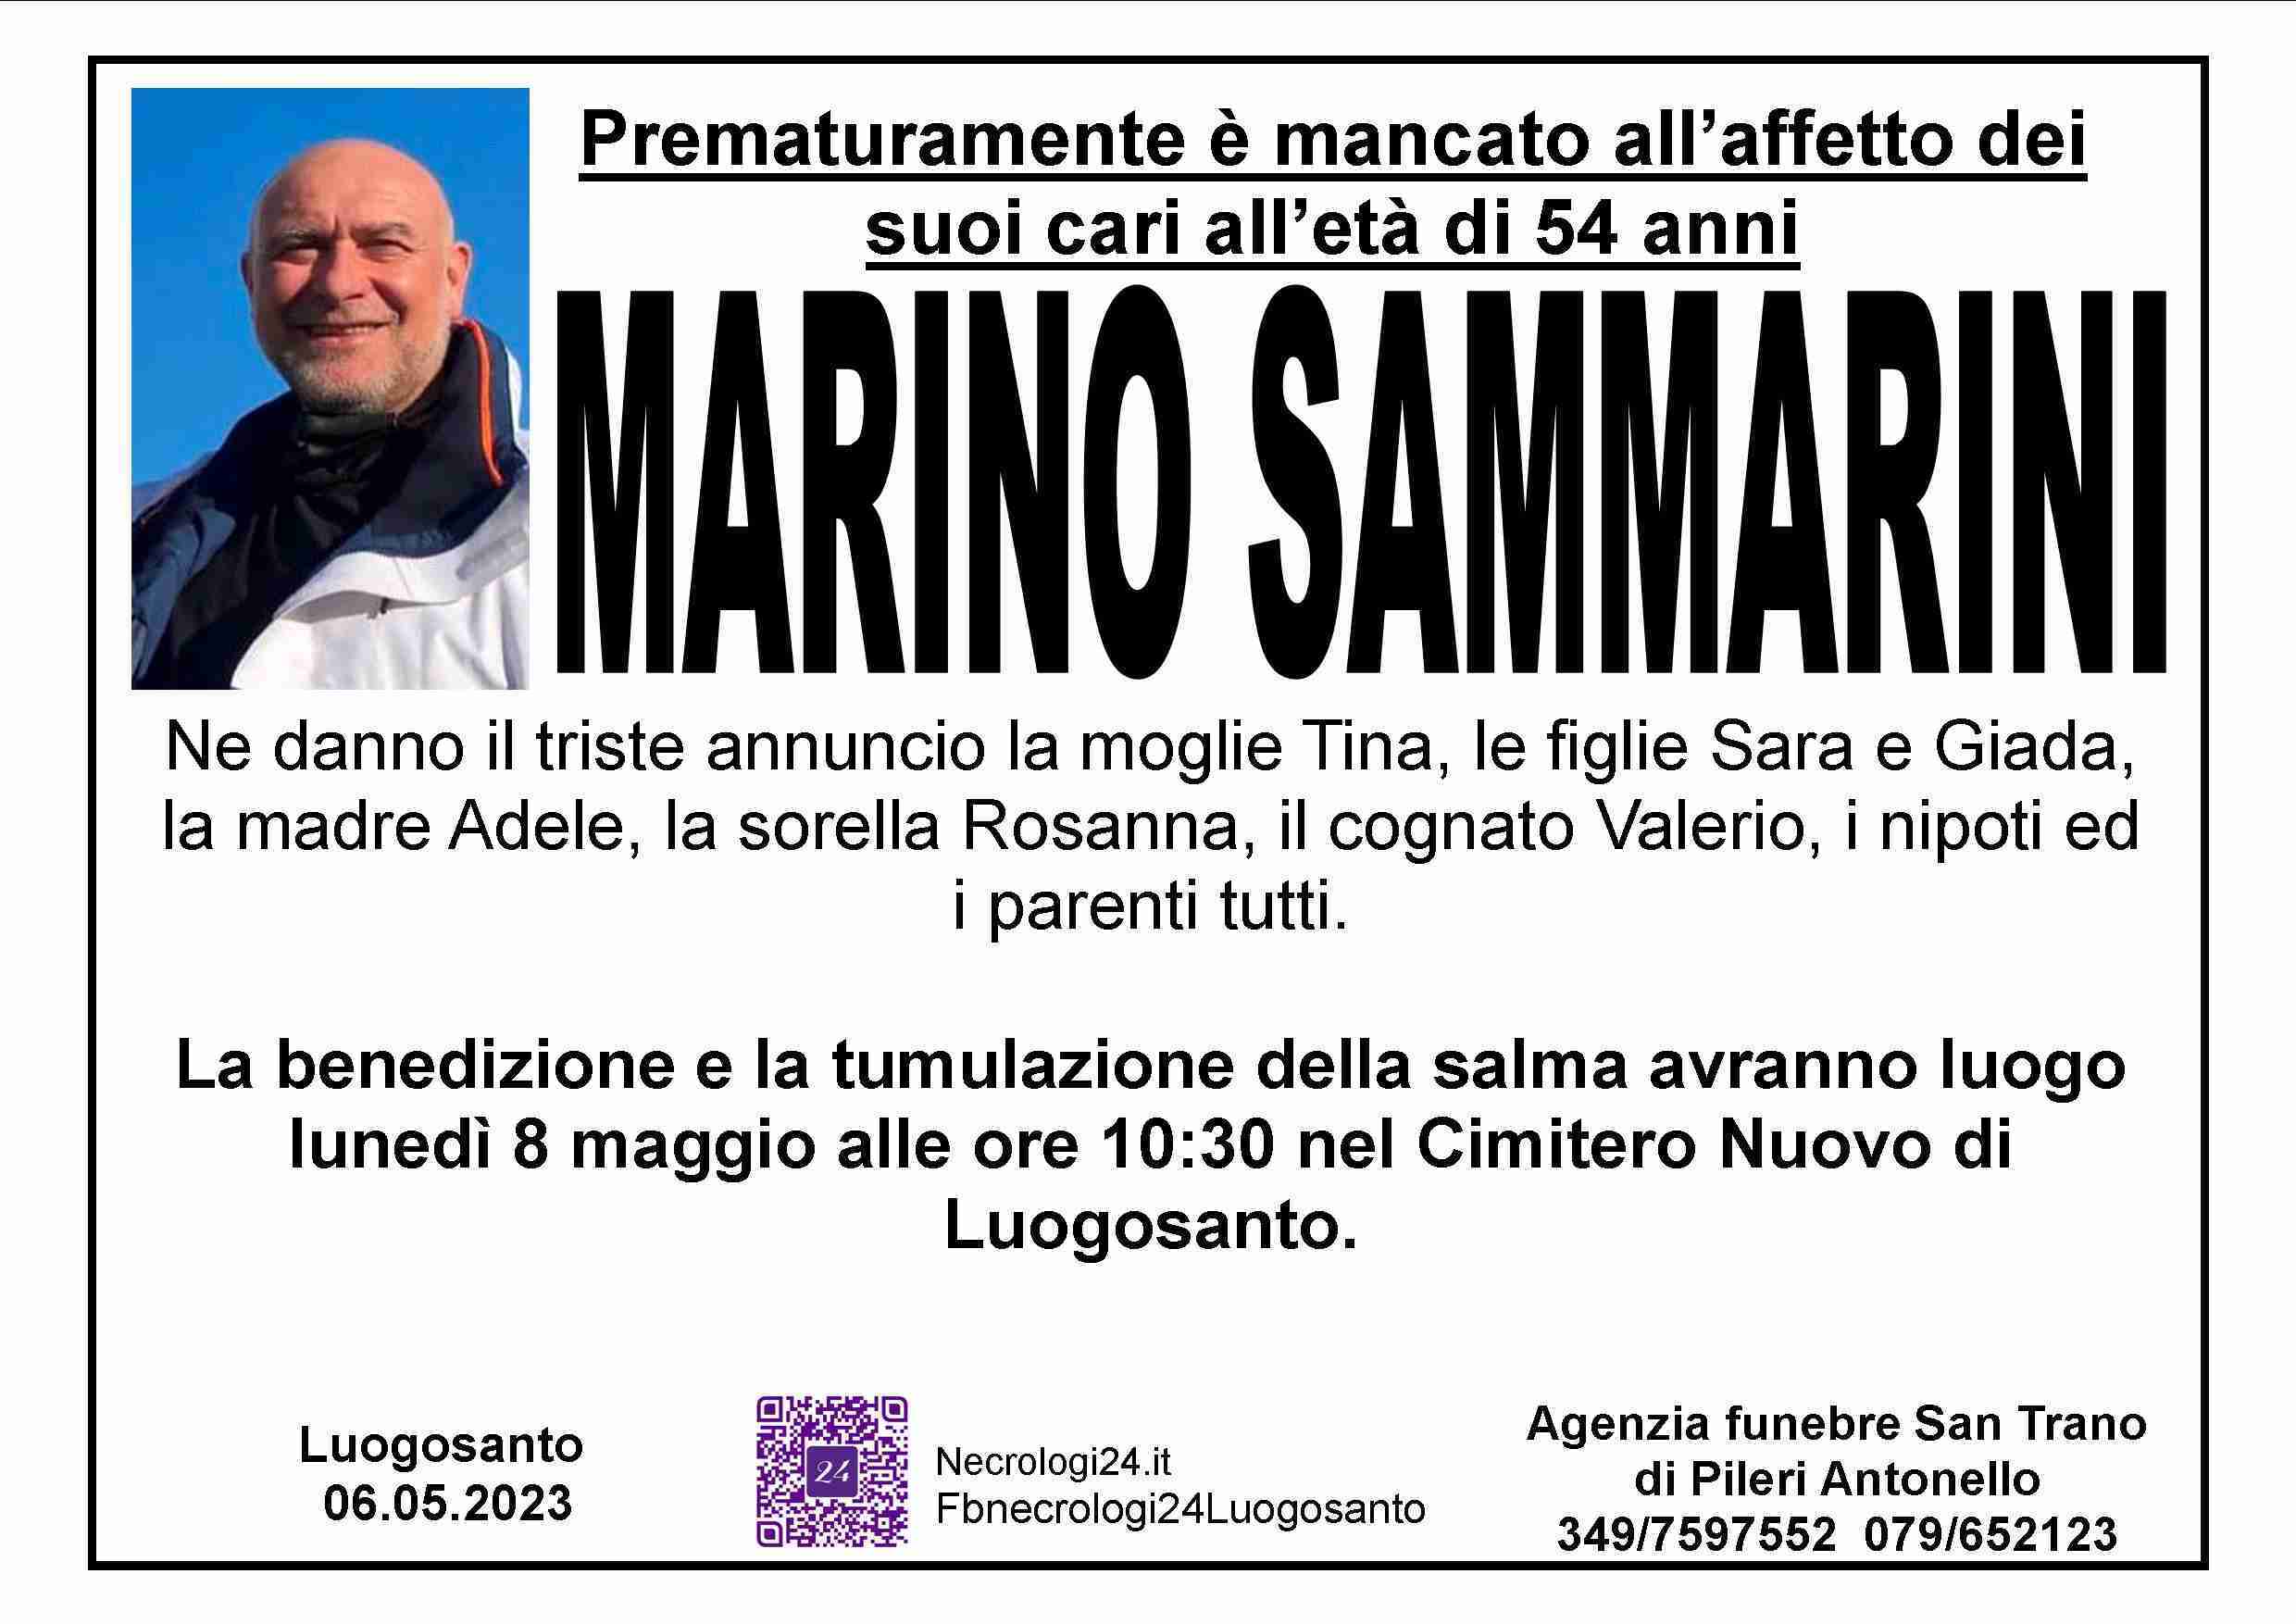 Marino Sammarini